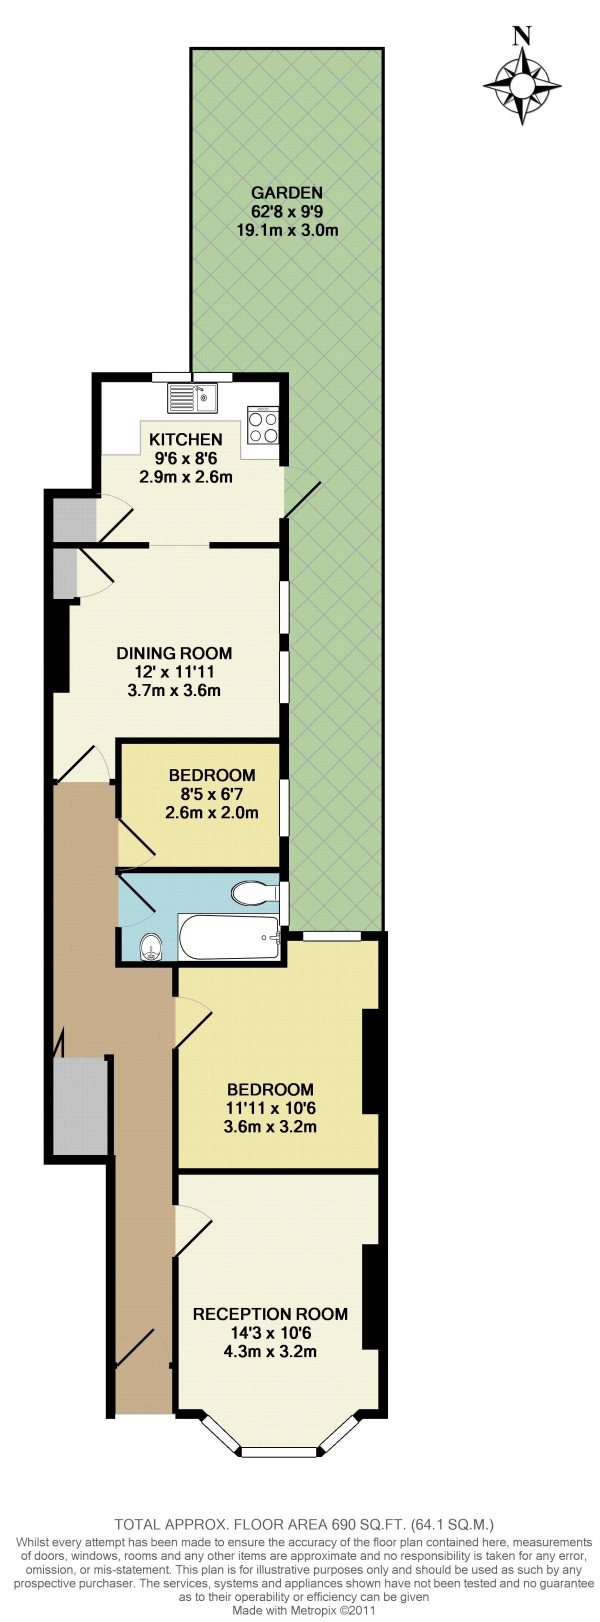 Floor Plan Image for 3 Bedroom Maisonette to Rent in Maryland Road, Wood Green, N22